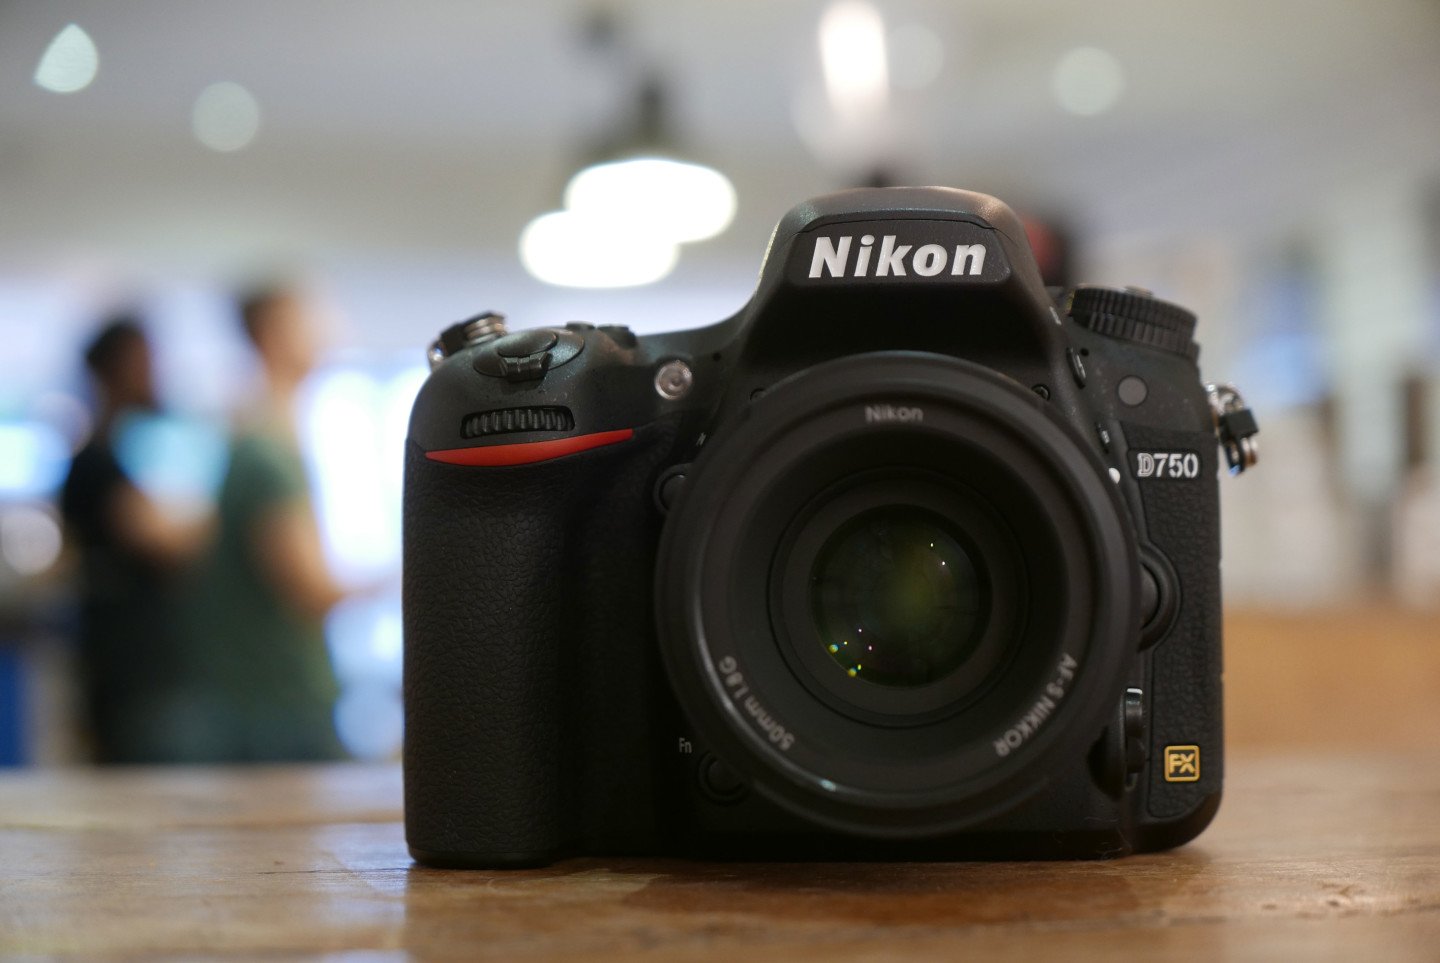 Nikon D750 featured